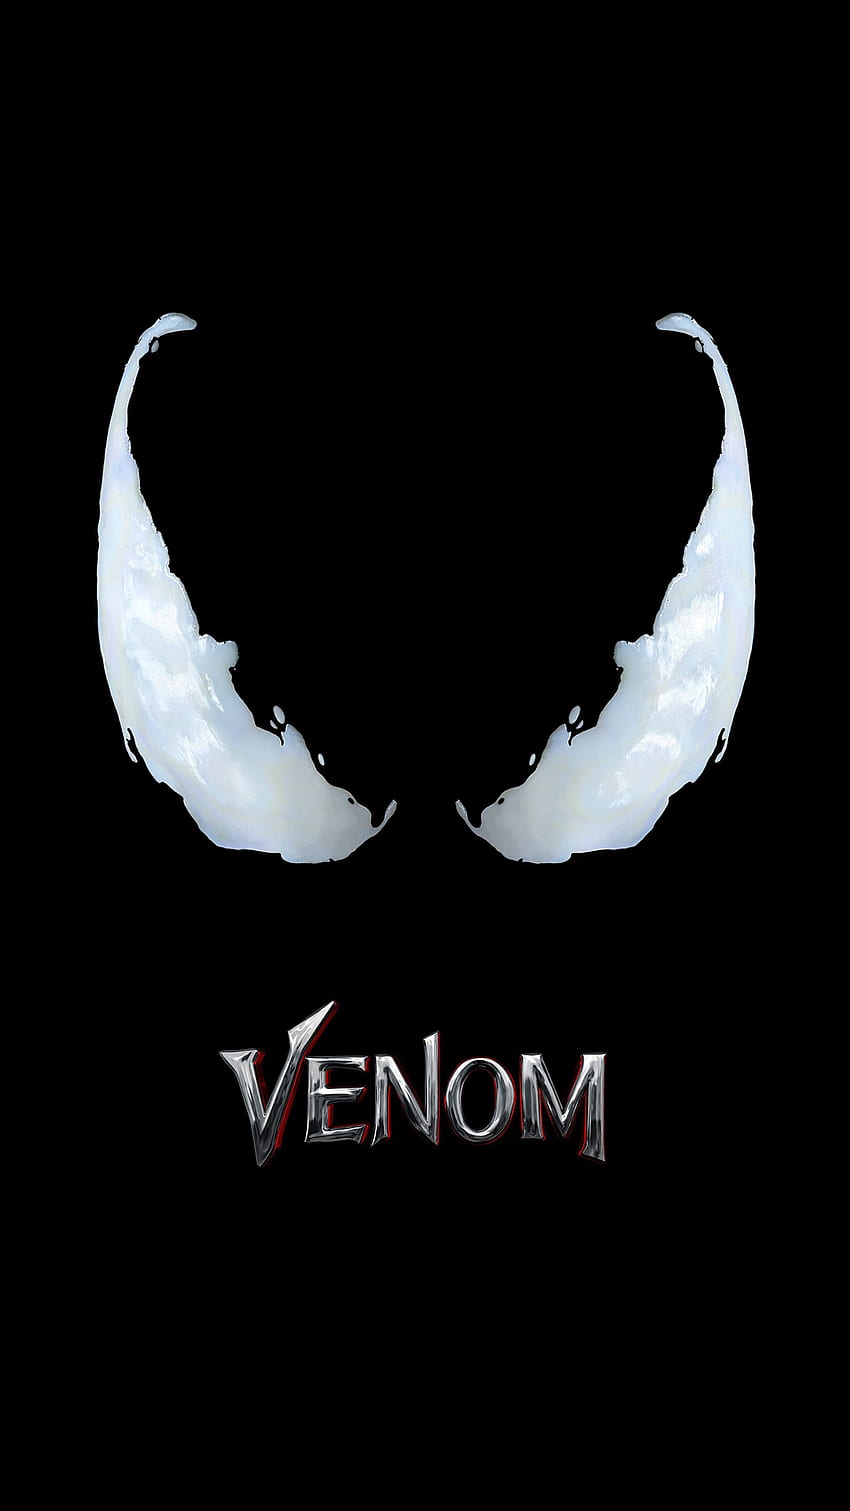 Venom Movie Logo Sony Xperia X, XZ, Z5 Premium HD phone wallpaper